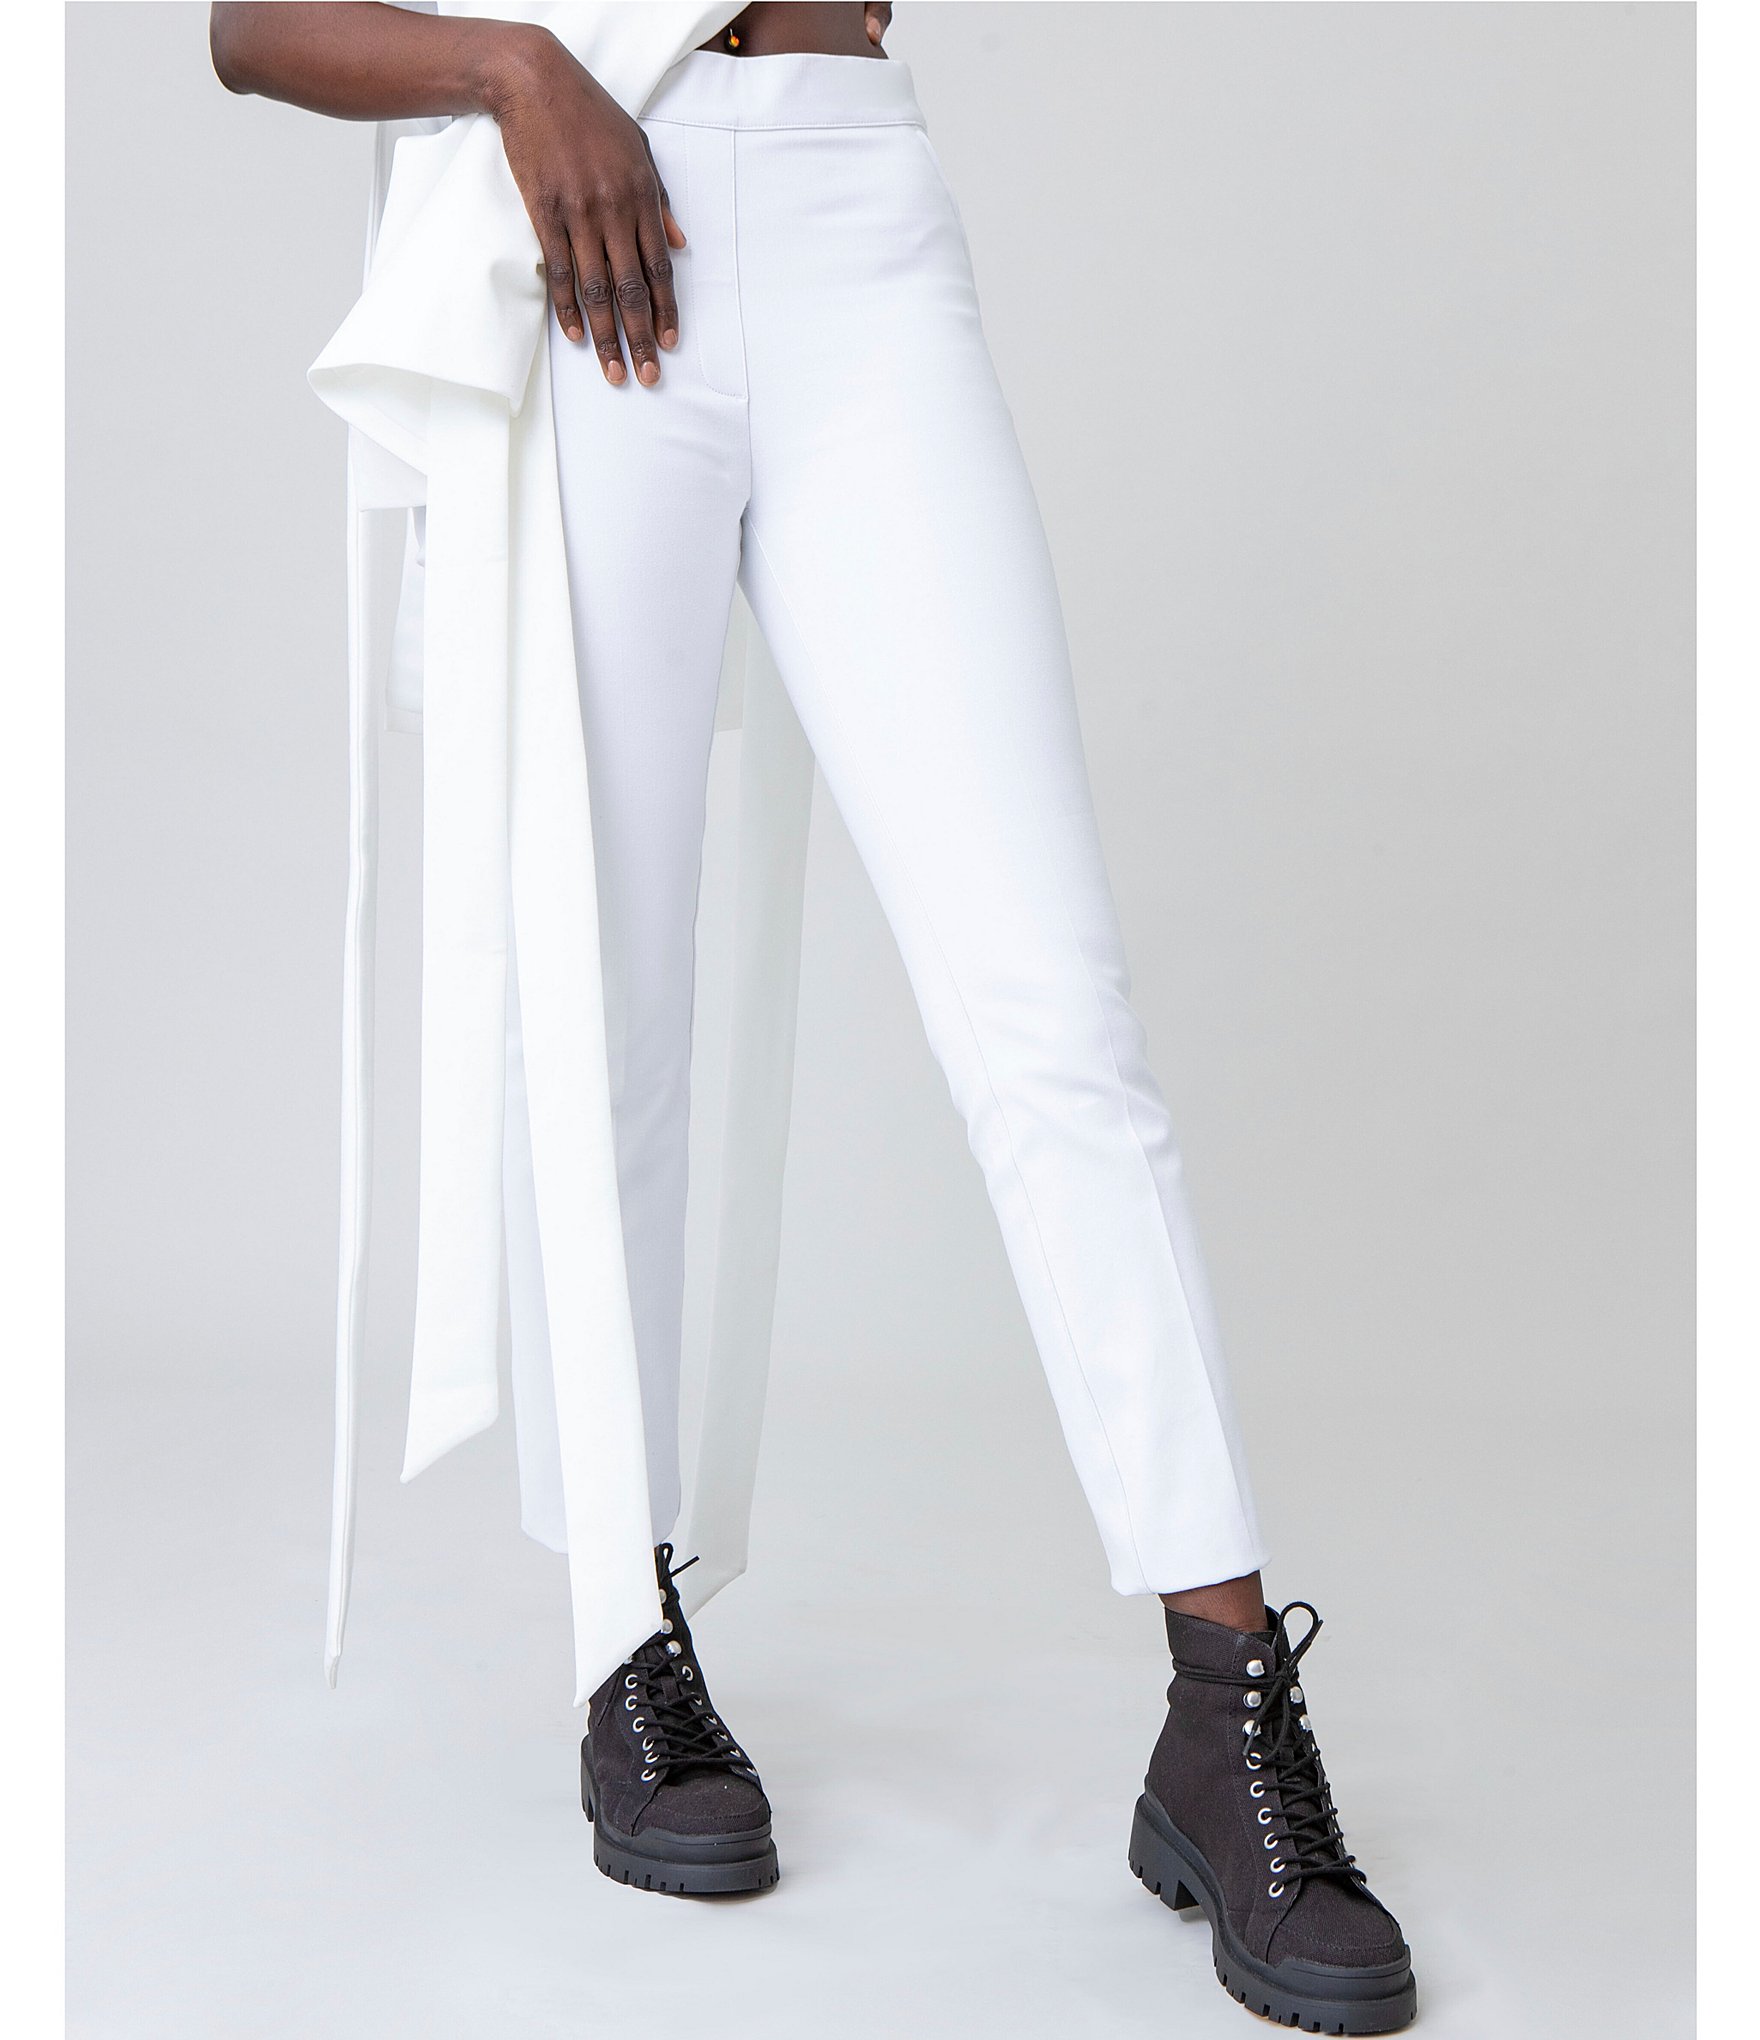 Pvc Leather  Latex on X vinyl trousers vinylpants pvctrousers  fashion outfits heels topshop zara httpstcoIXga1AIiCf  X